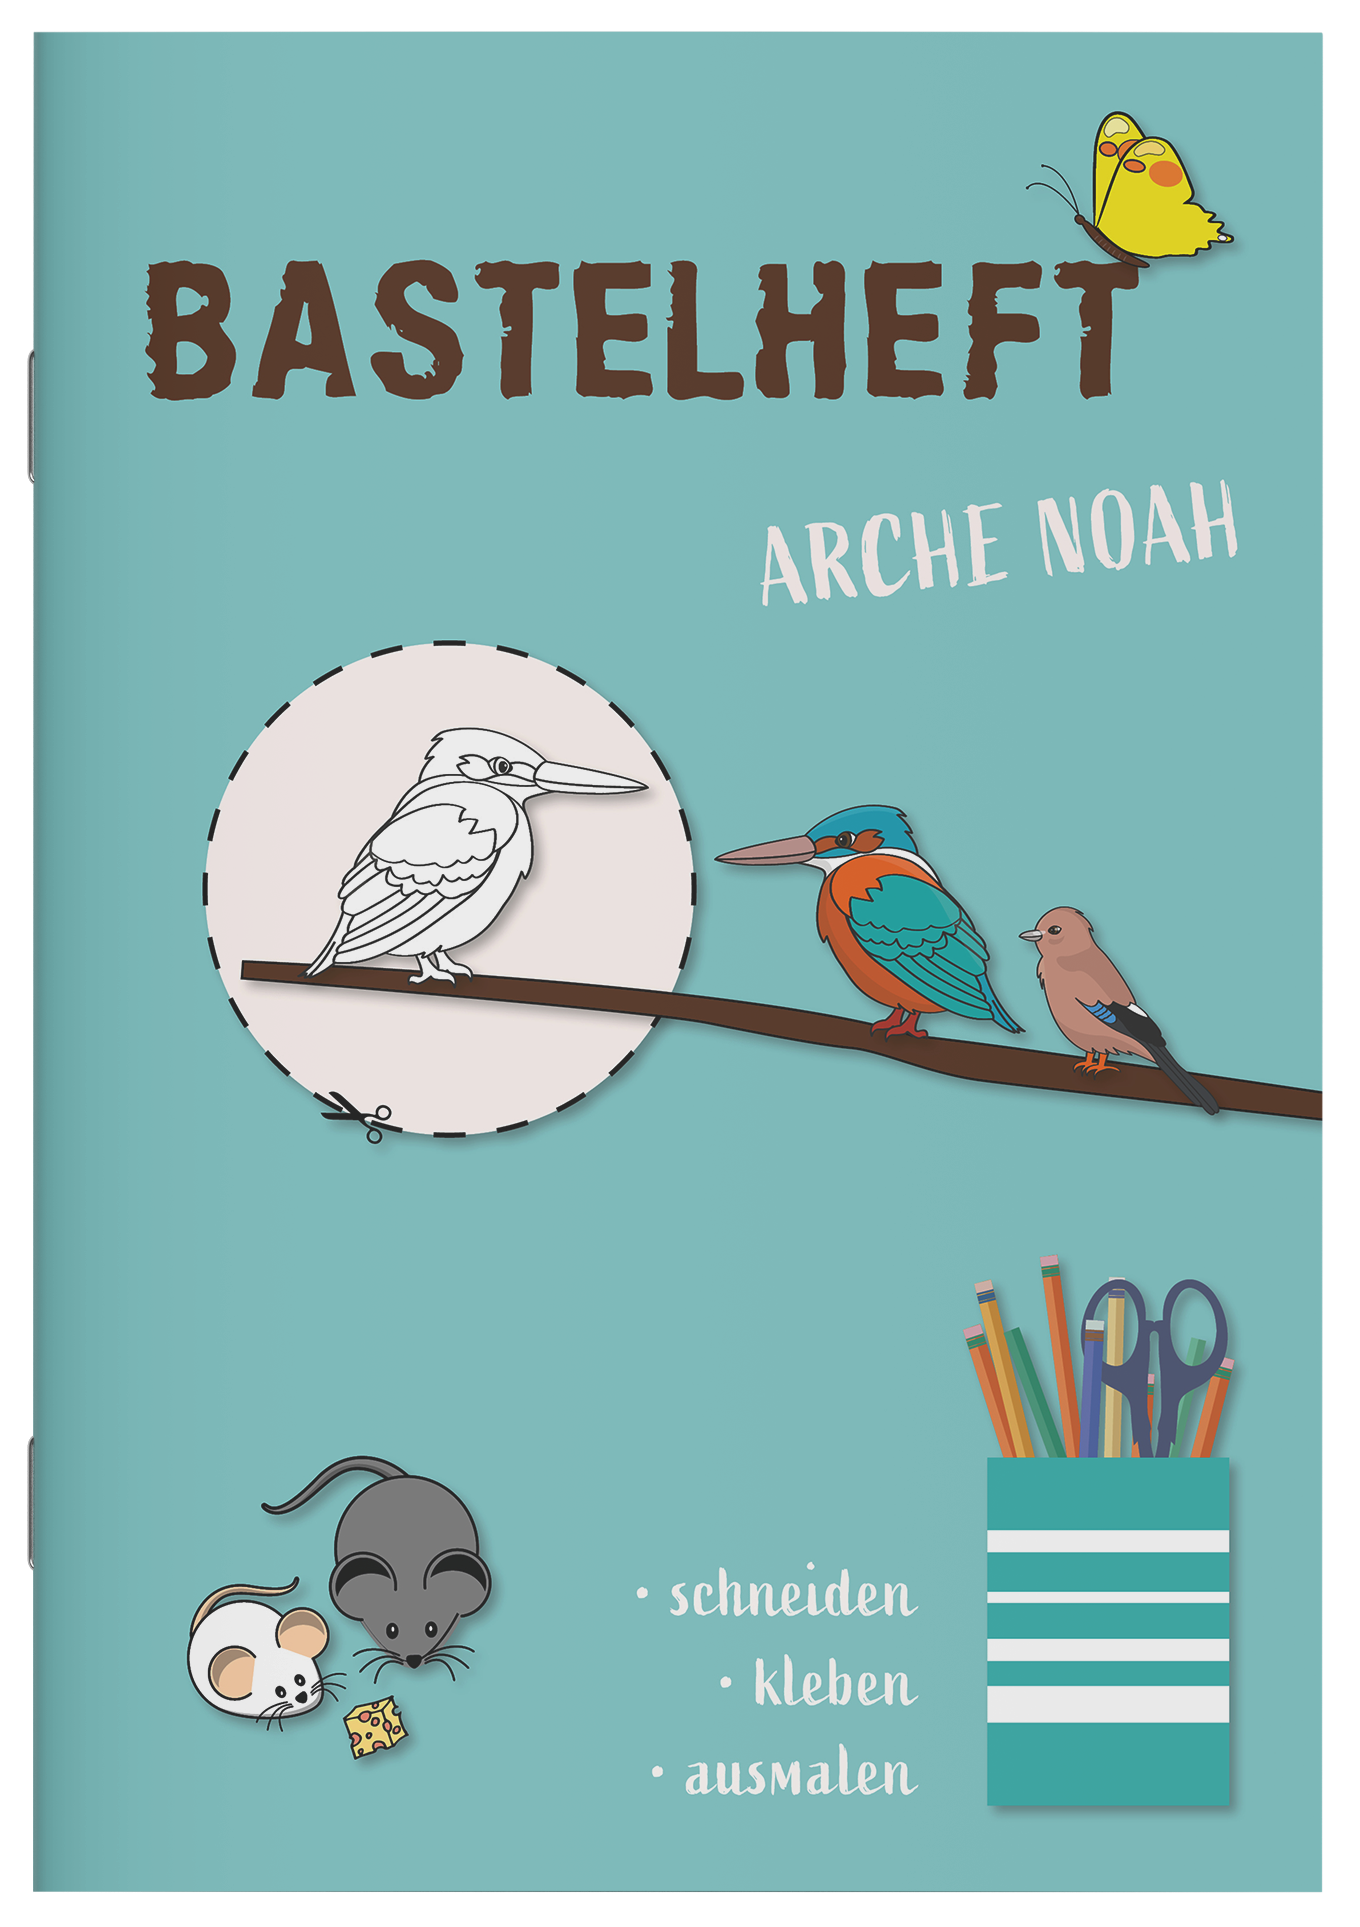 Bastelheft - Arche Noah